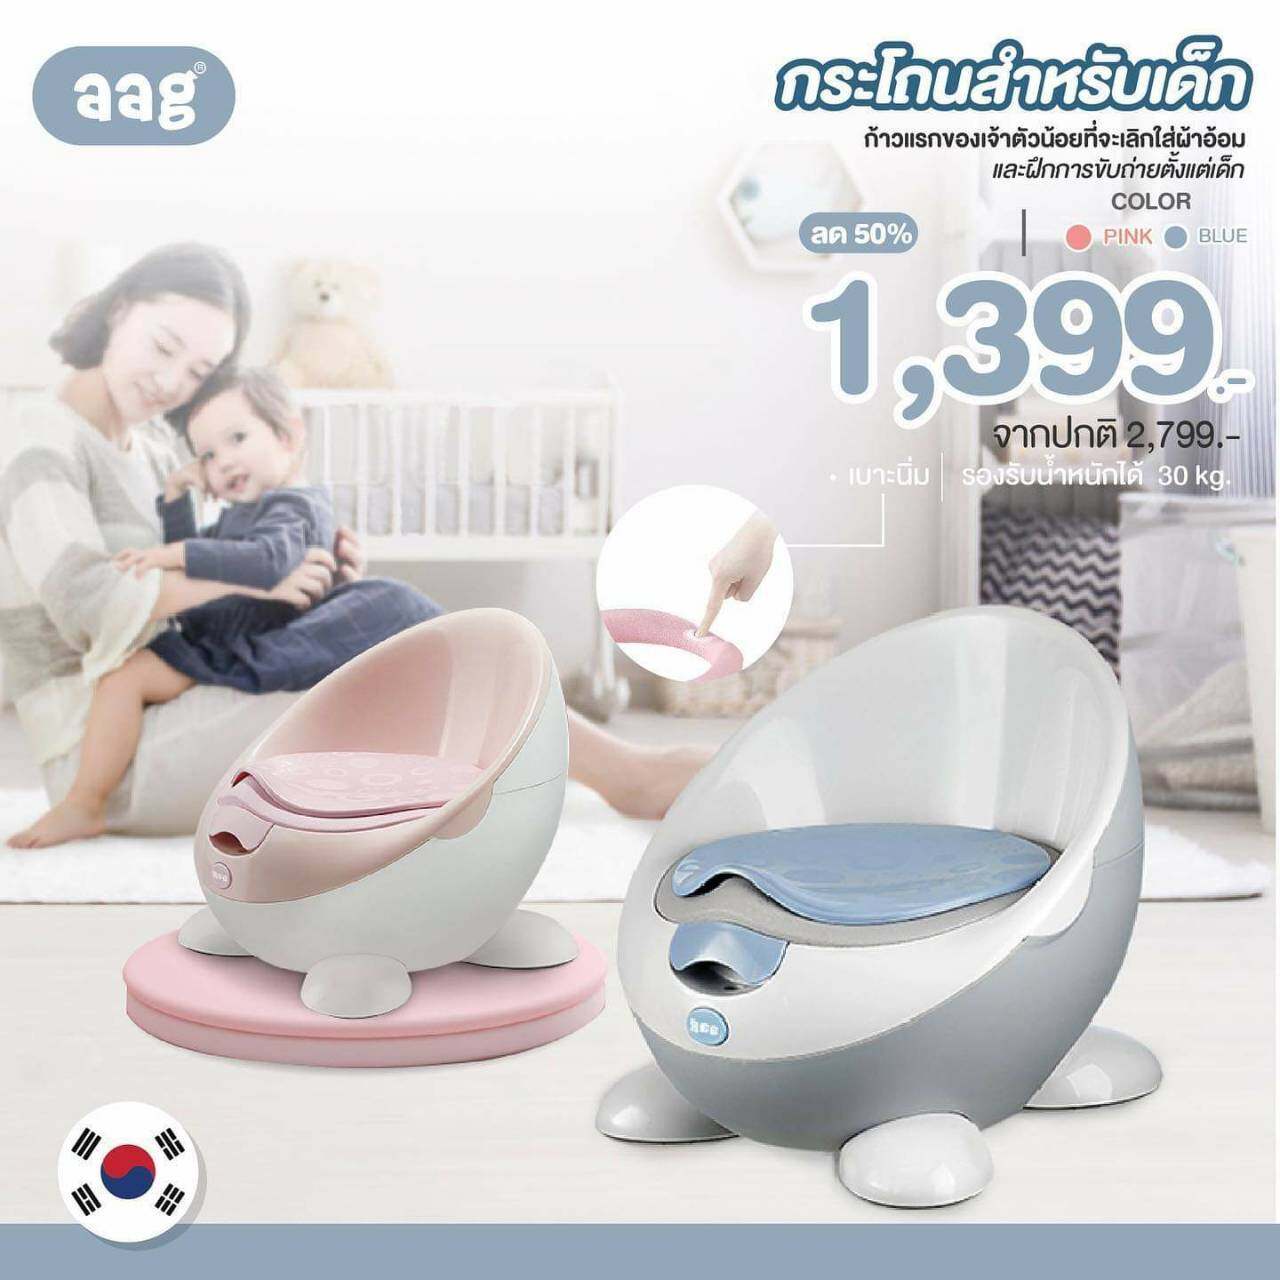 AAG (เอเอจี) Baby Chamber potty กระโถนสำหรับเด็ก รองรับน้ำหนักสูงสุด 30 กิโลกรัม ถอดทำตวามสะอาดง่าย